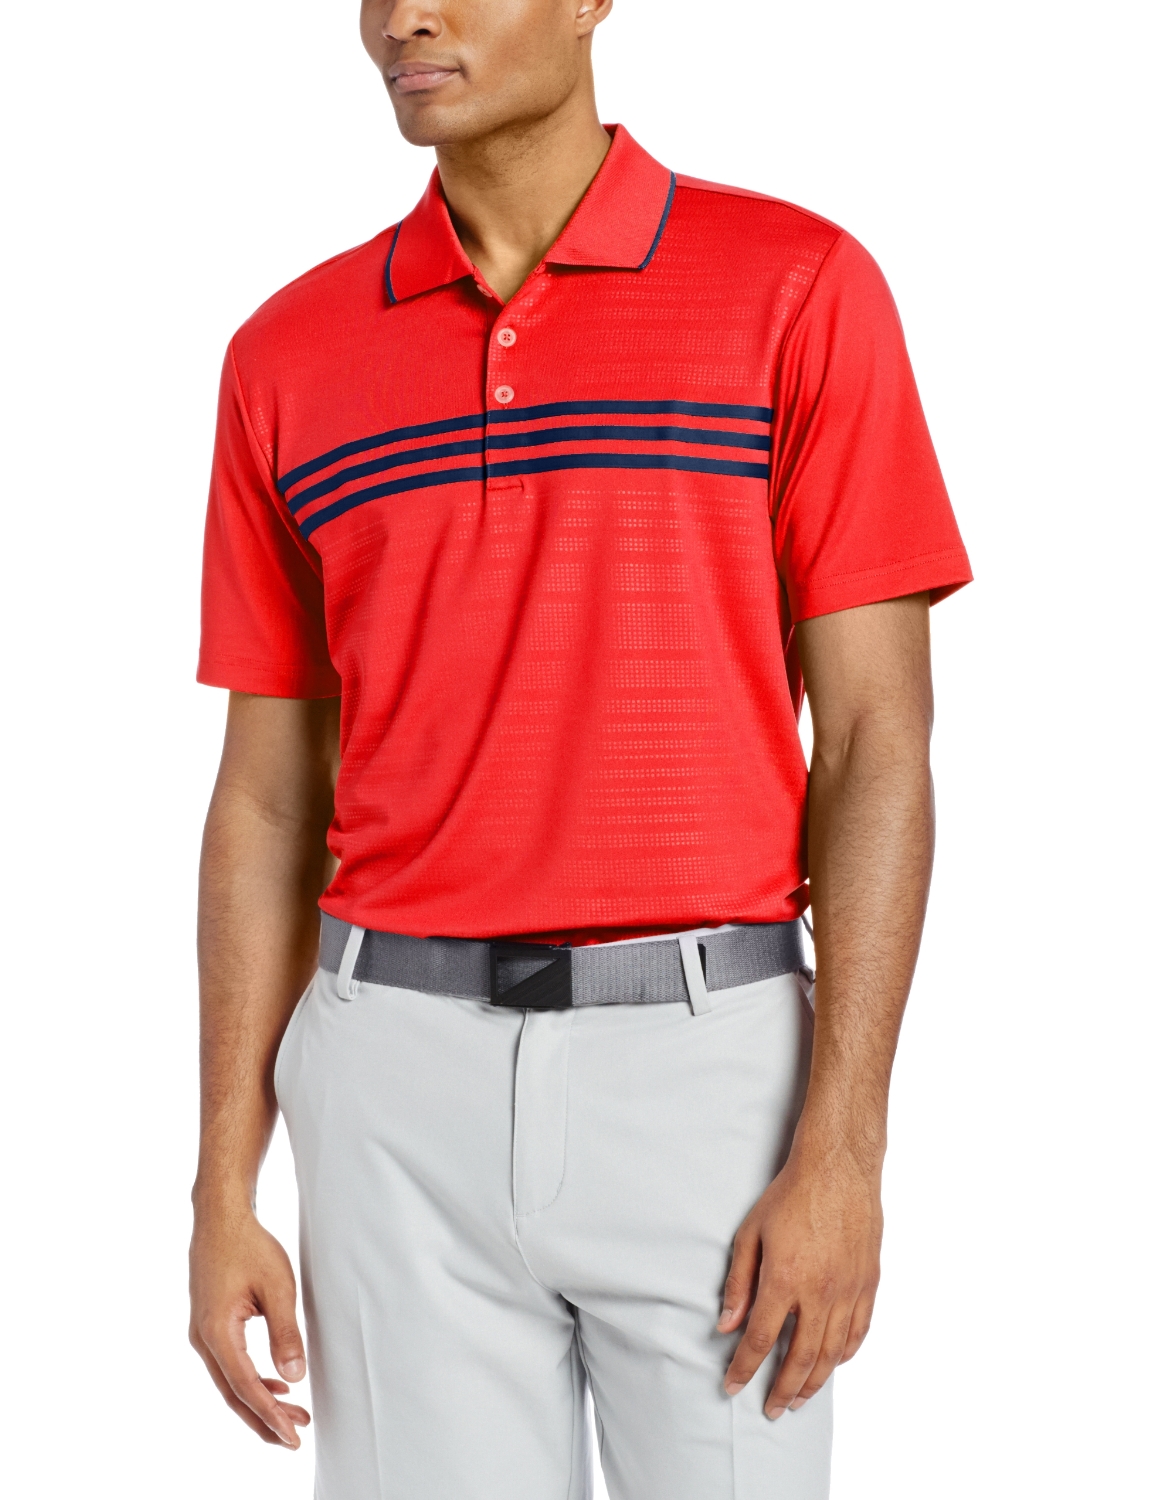 Mens Puremotion Climacool 3 Stripes Chest Golf Polo Shirts